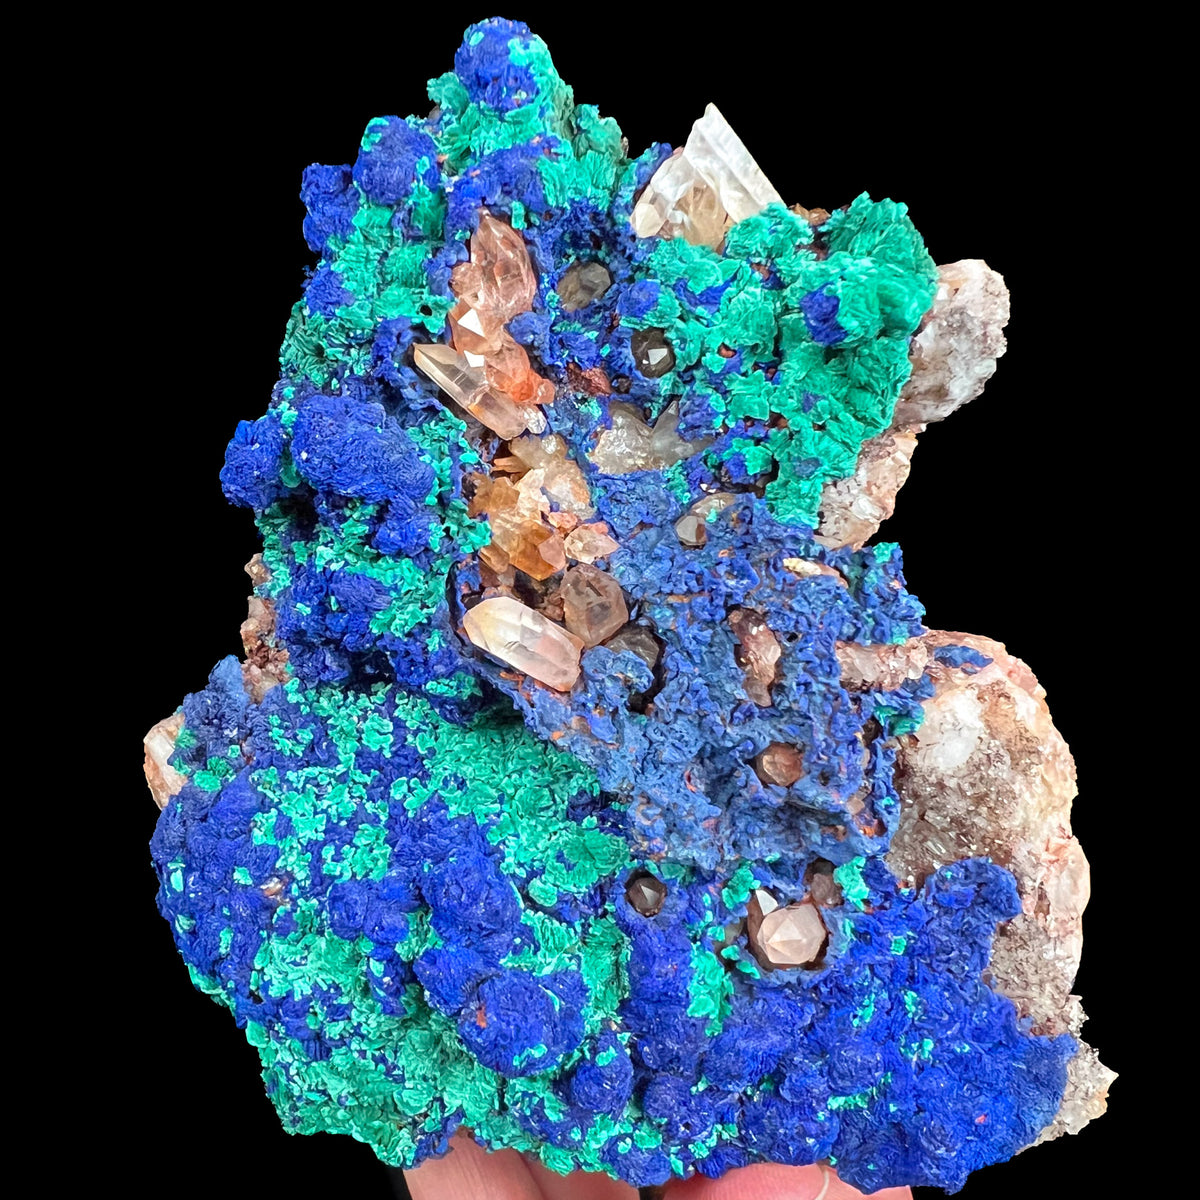 Large Mineral Specimen of Azurite and Malachite on Quartz Crystals